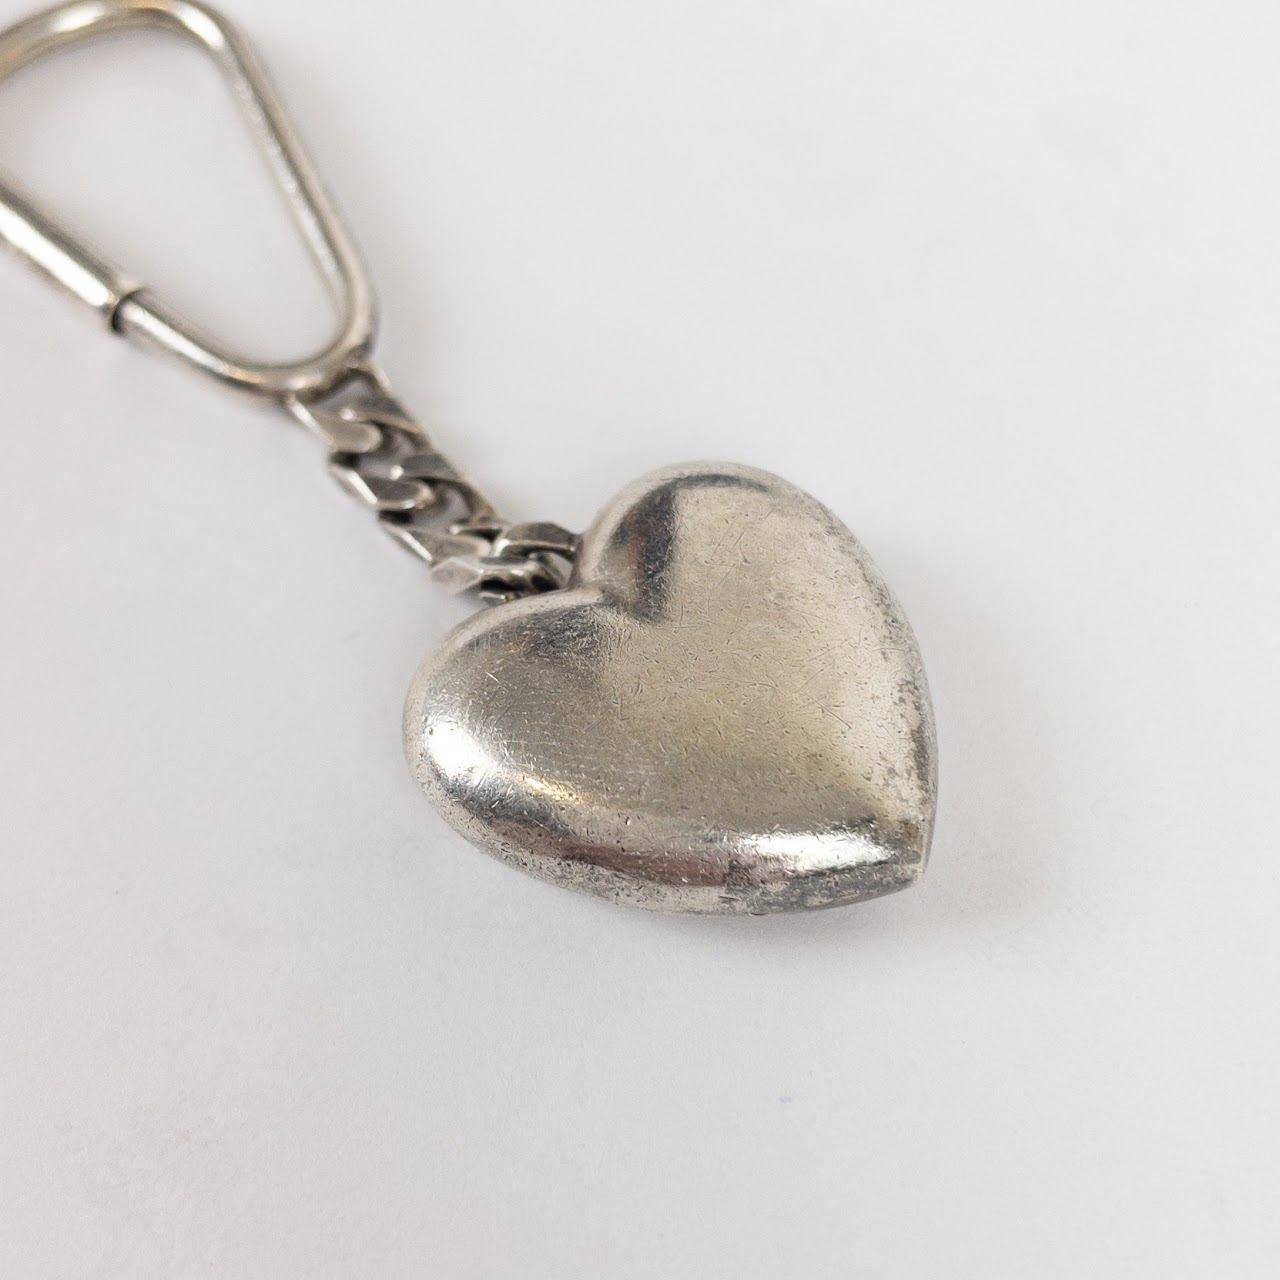 Tiffany & Co. Sterling Silver Heart Keychain